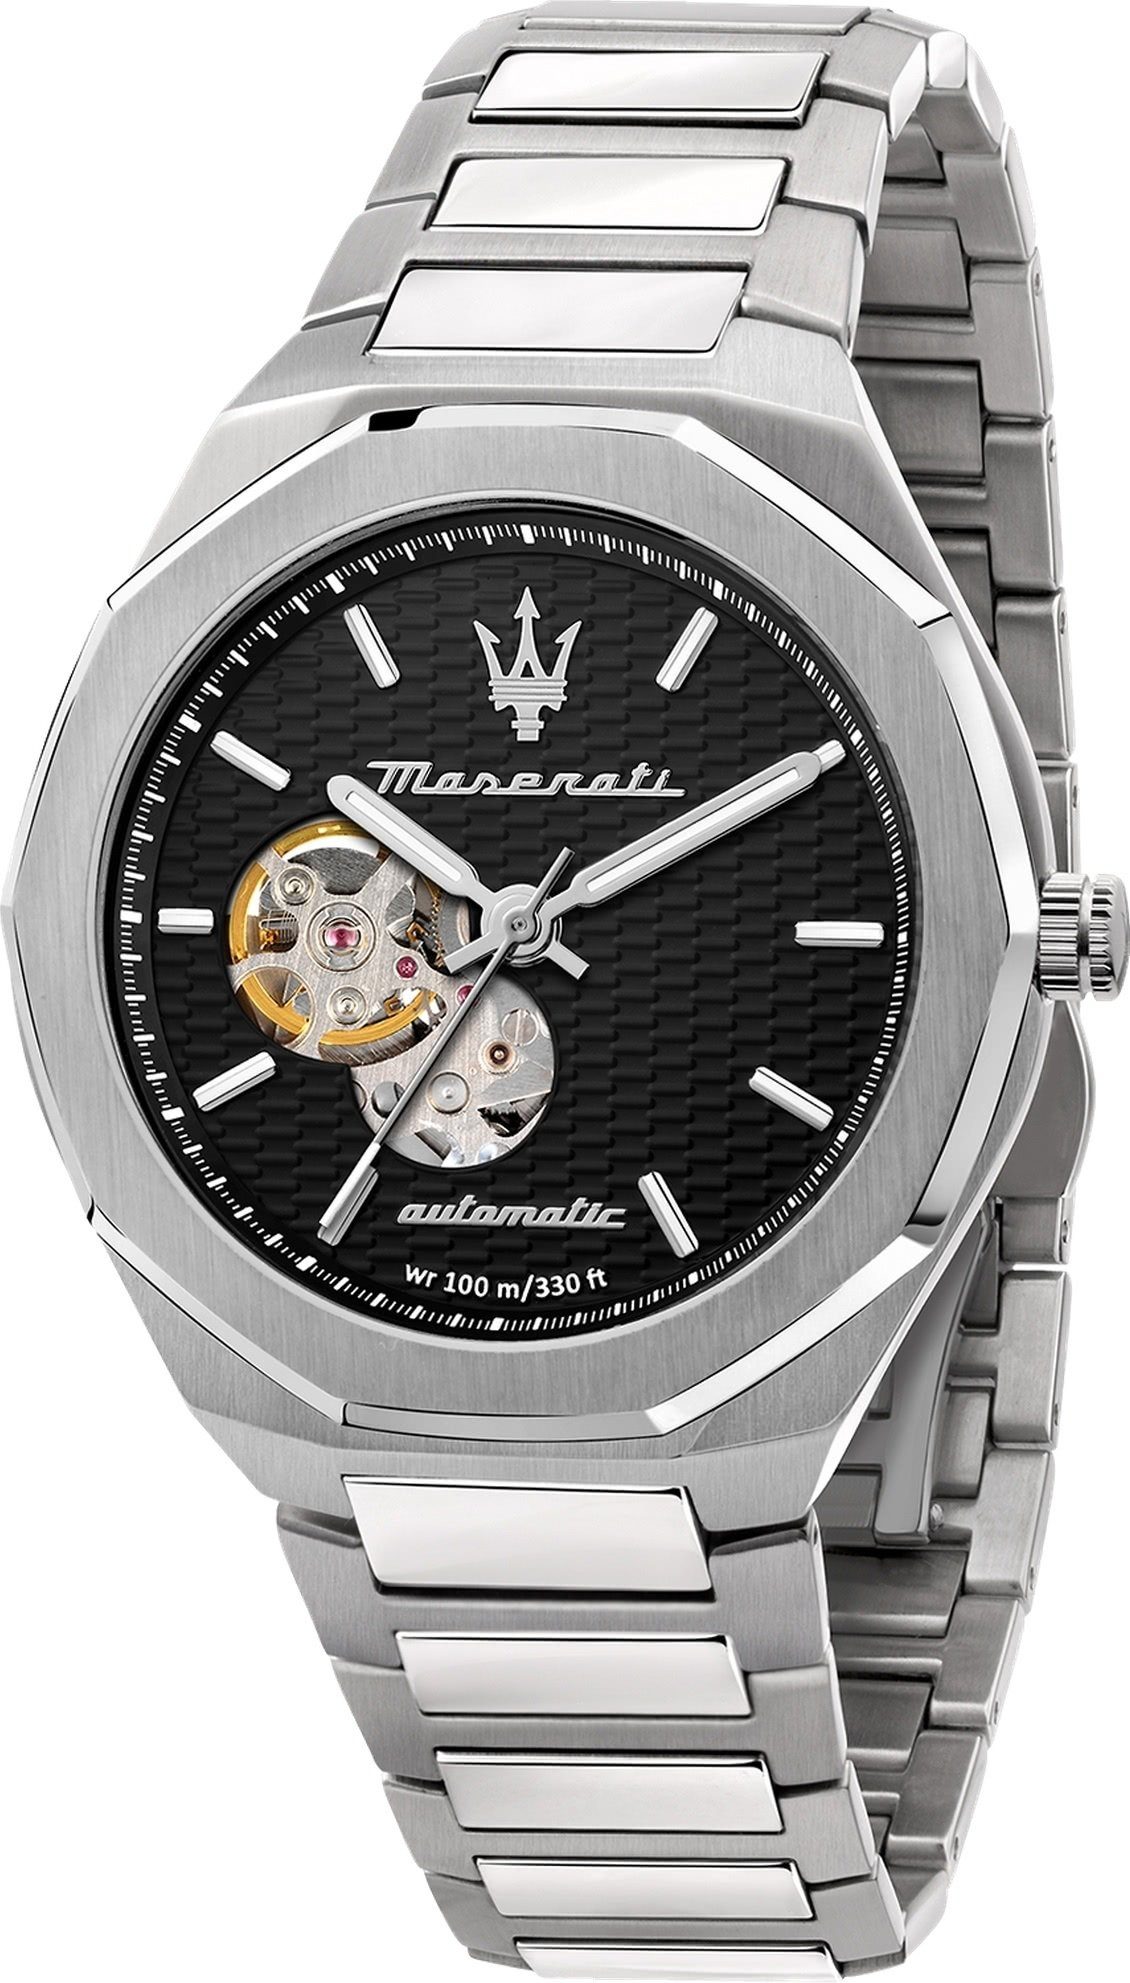 Herrenuhr Quarzuhr STILE, rund, Edelstahlarmband, Uhr 42mm) Maserati groß Herren Italy MASERATI (ca. Made-In Analog